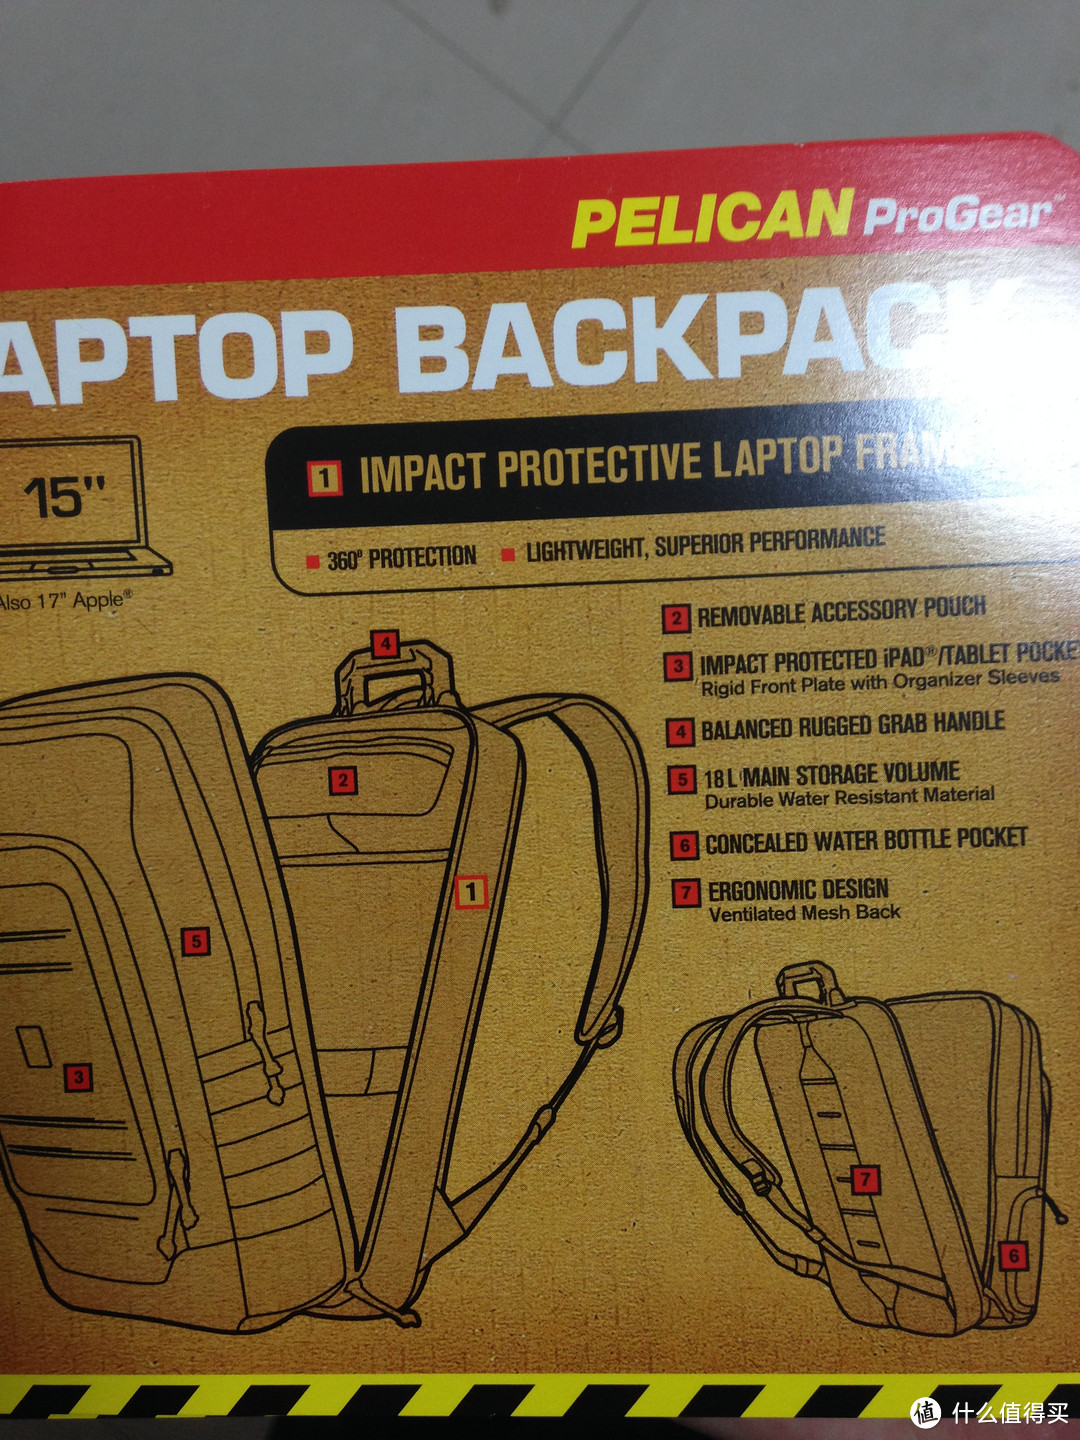 Pelican 派力肯 Products OU1050-0003-111 ProGear Lite 双肩电脑包